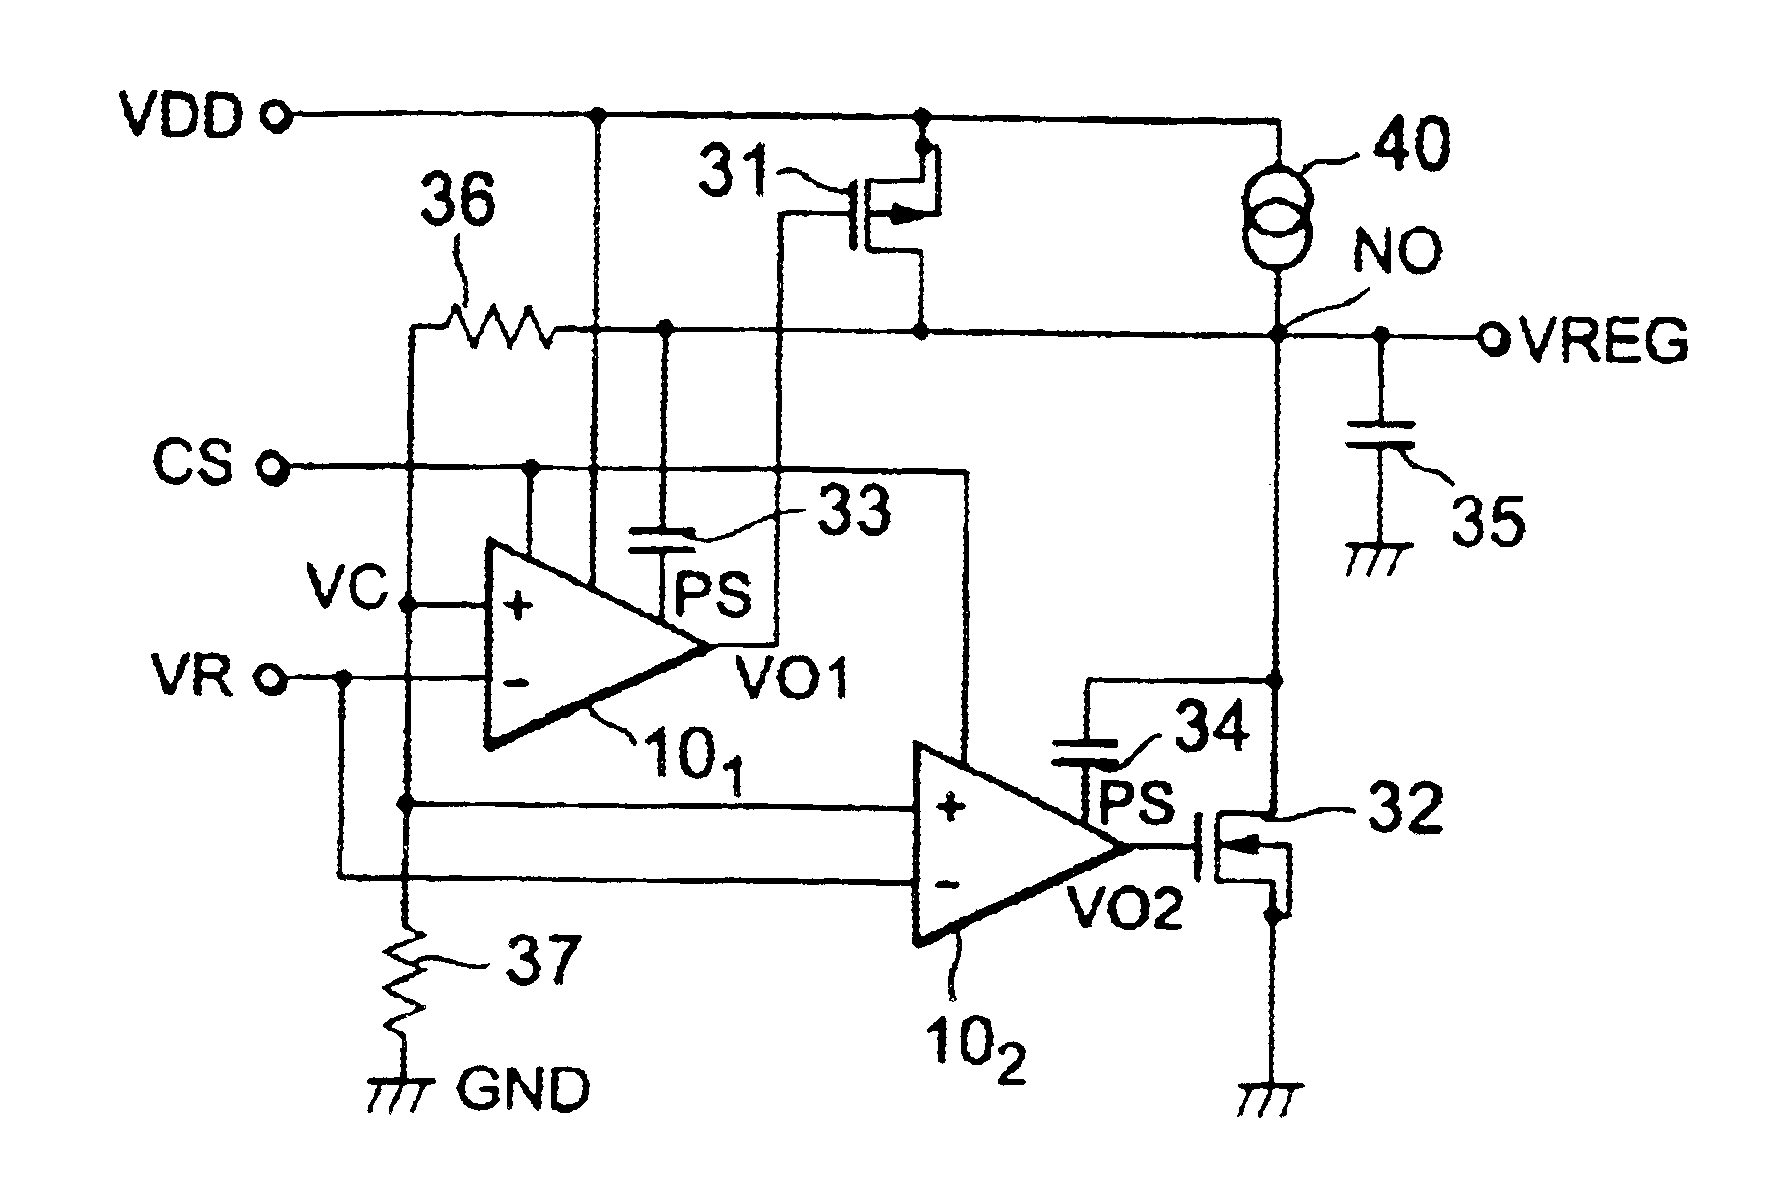 Voltage regulator combining a series type regulator with a shunt type regulator having a constant current source